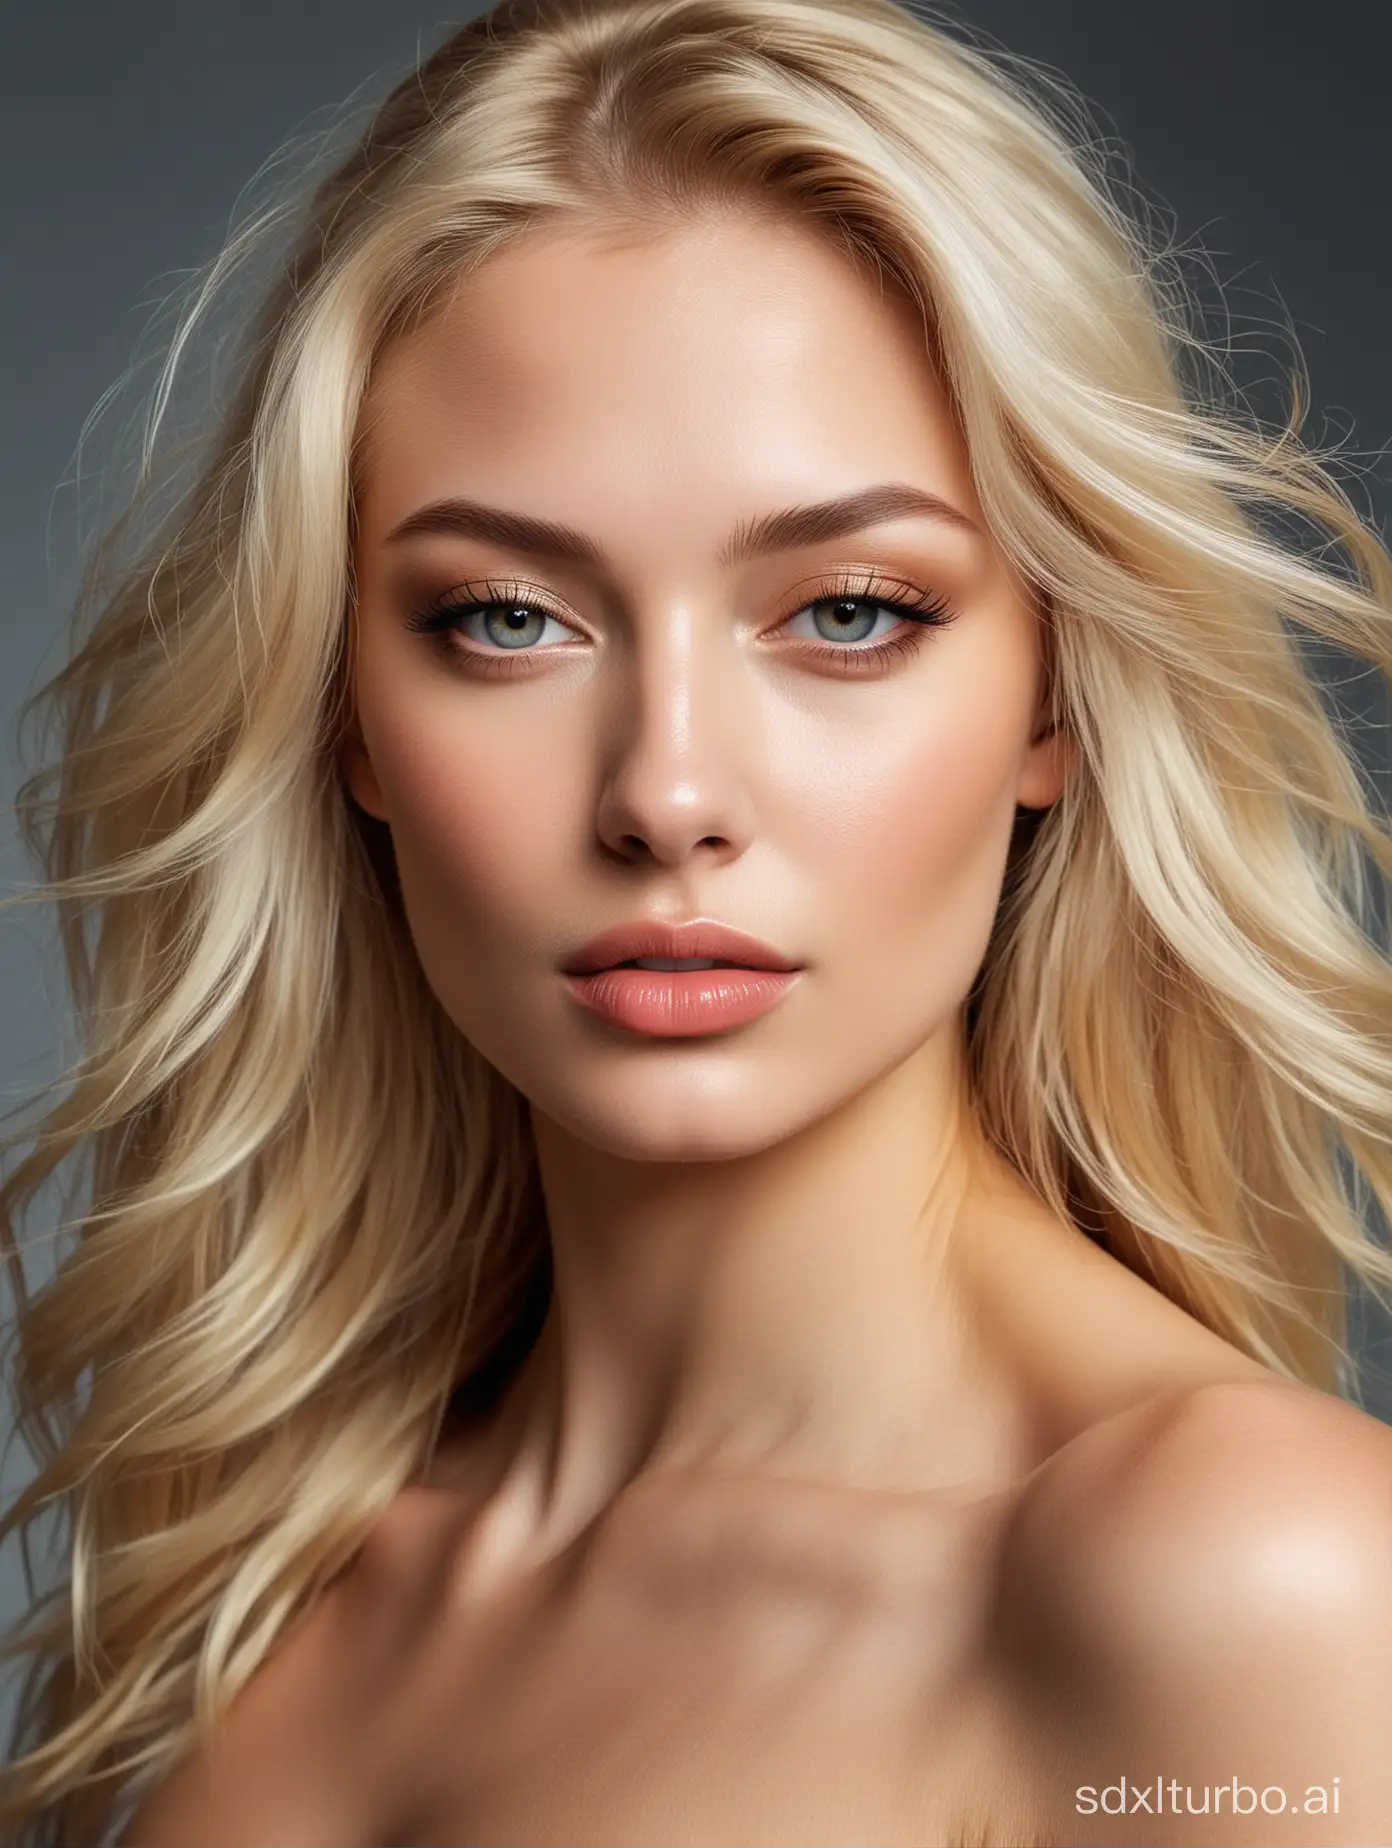 Portrait-of-Russian-Blonde-Supermodel-Sasha-Lush-Captivating-Beauty-in-High-Fashion